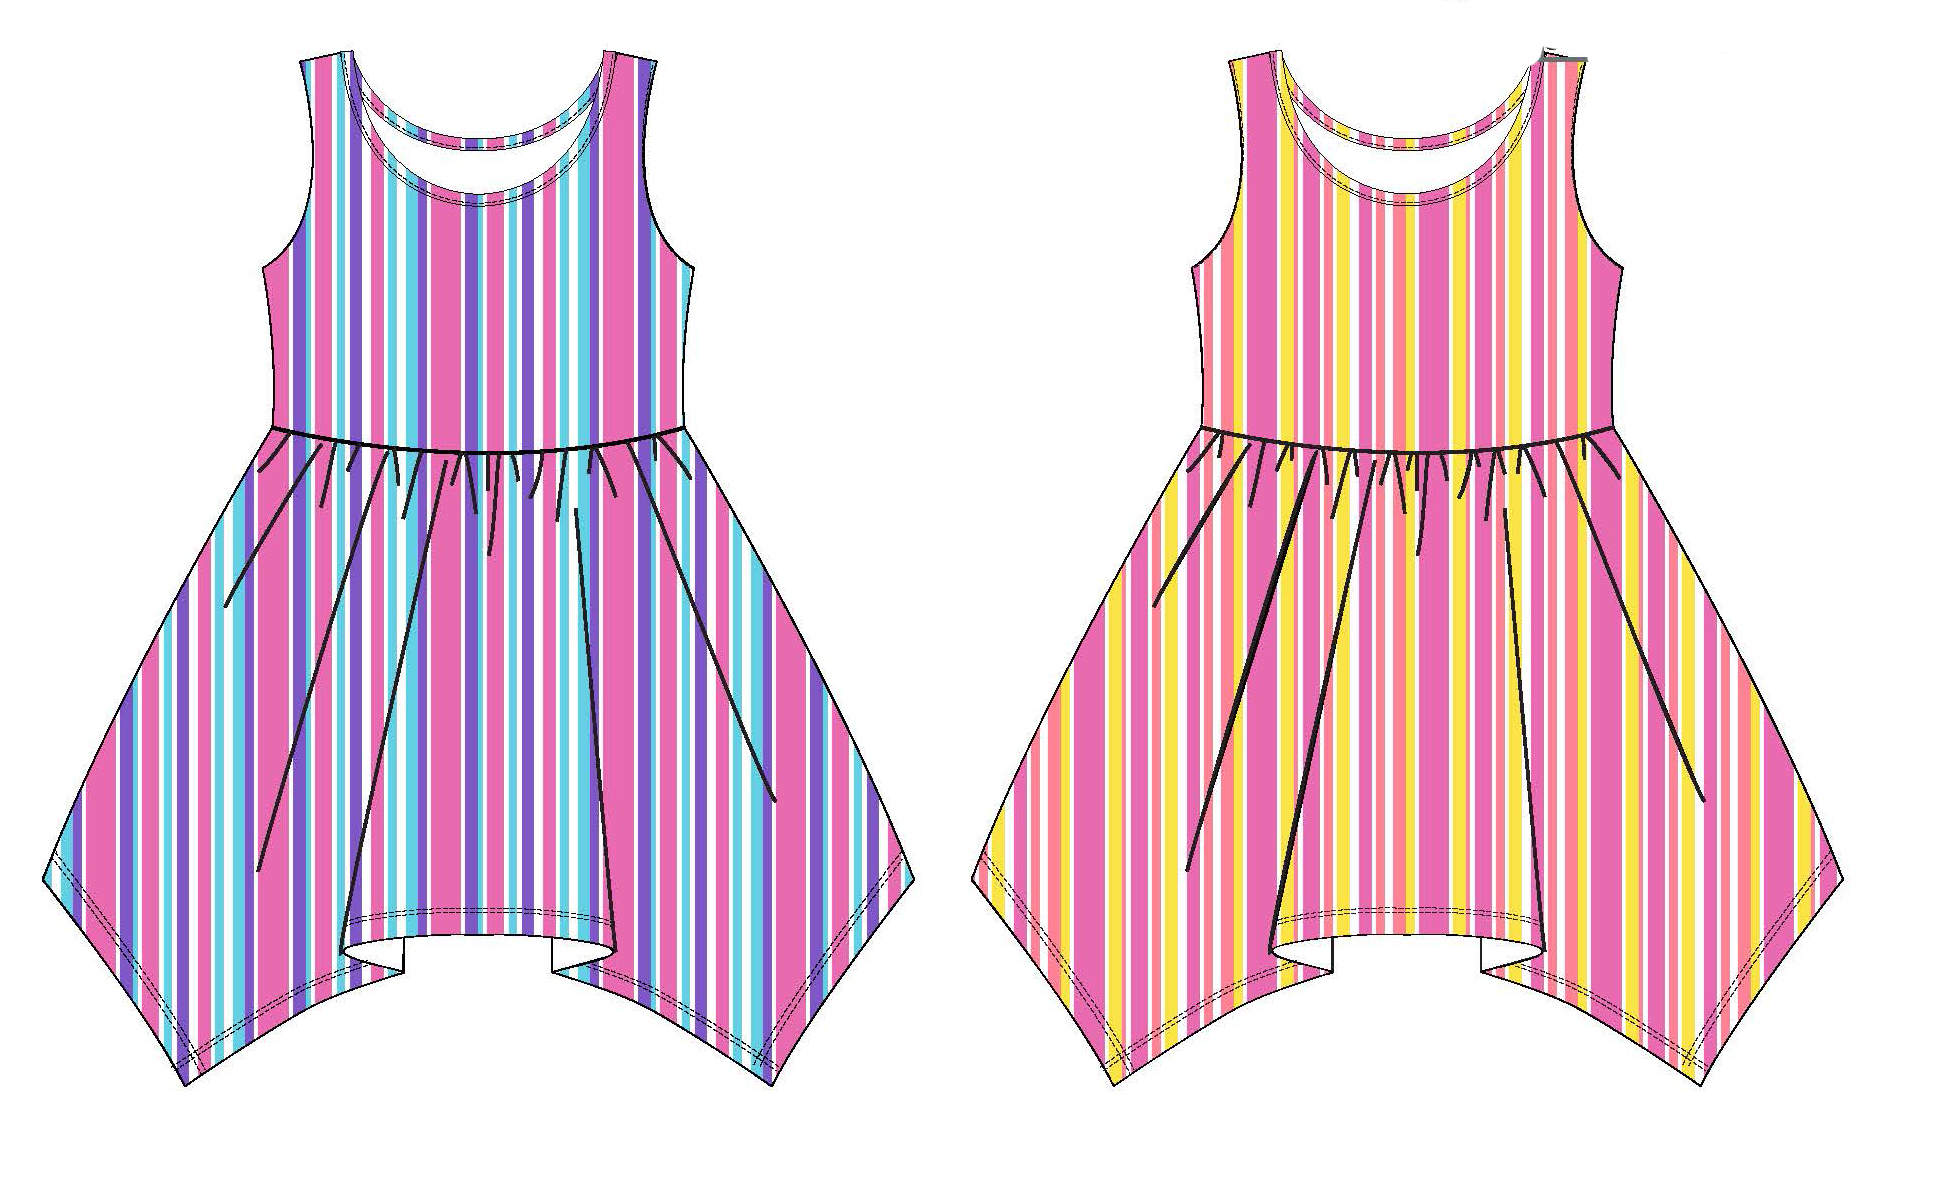 Toddler Girl's Sleeveless Knit Shirtwaist DRESS w/ Two Tone Stripes - Size 2T-4T